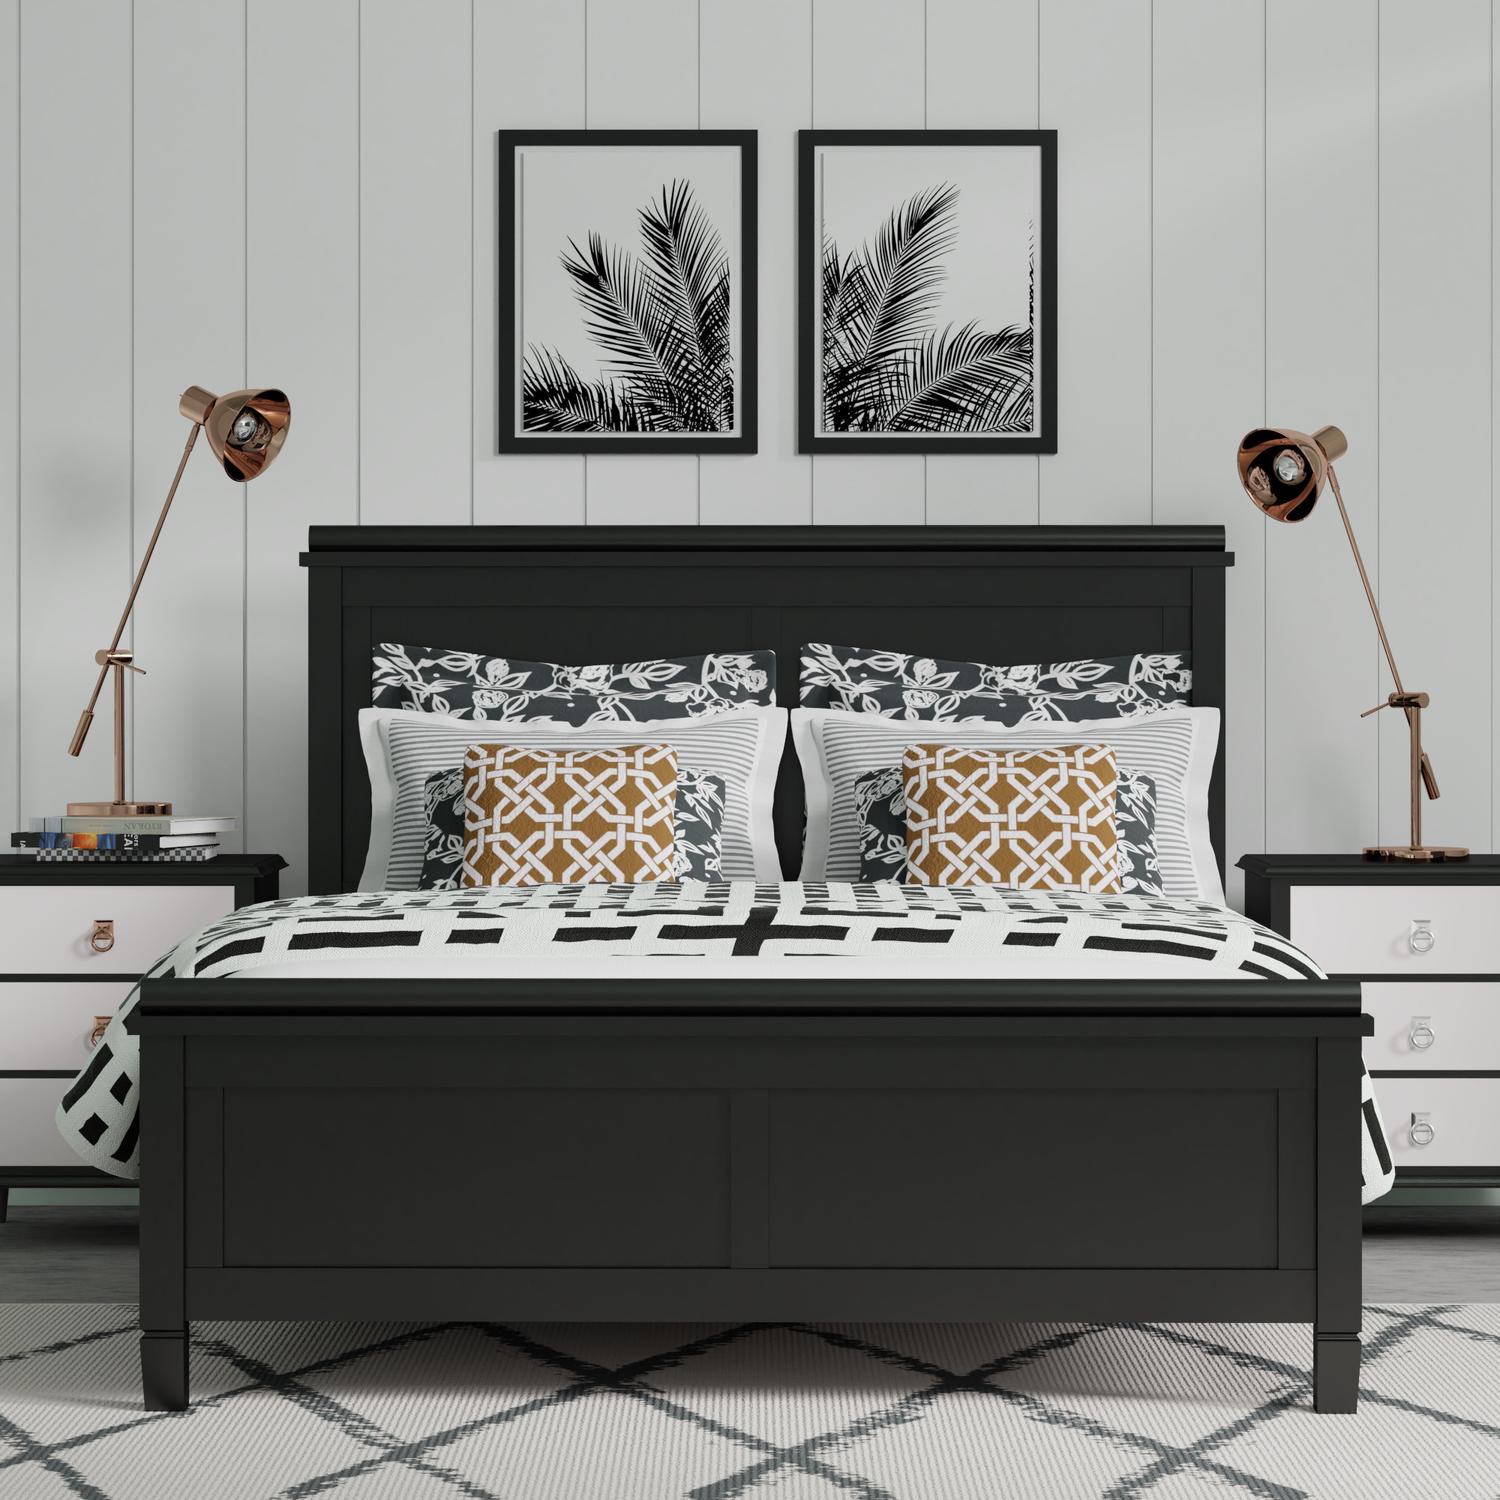 Nocturne wooden bed - Image black and white bedroom